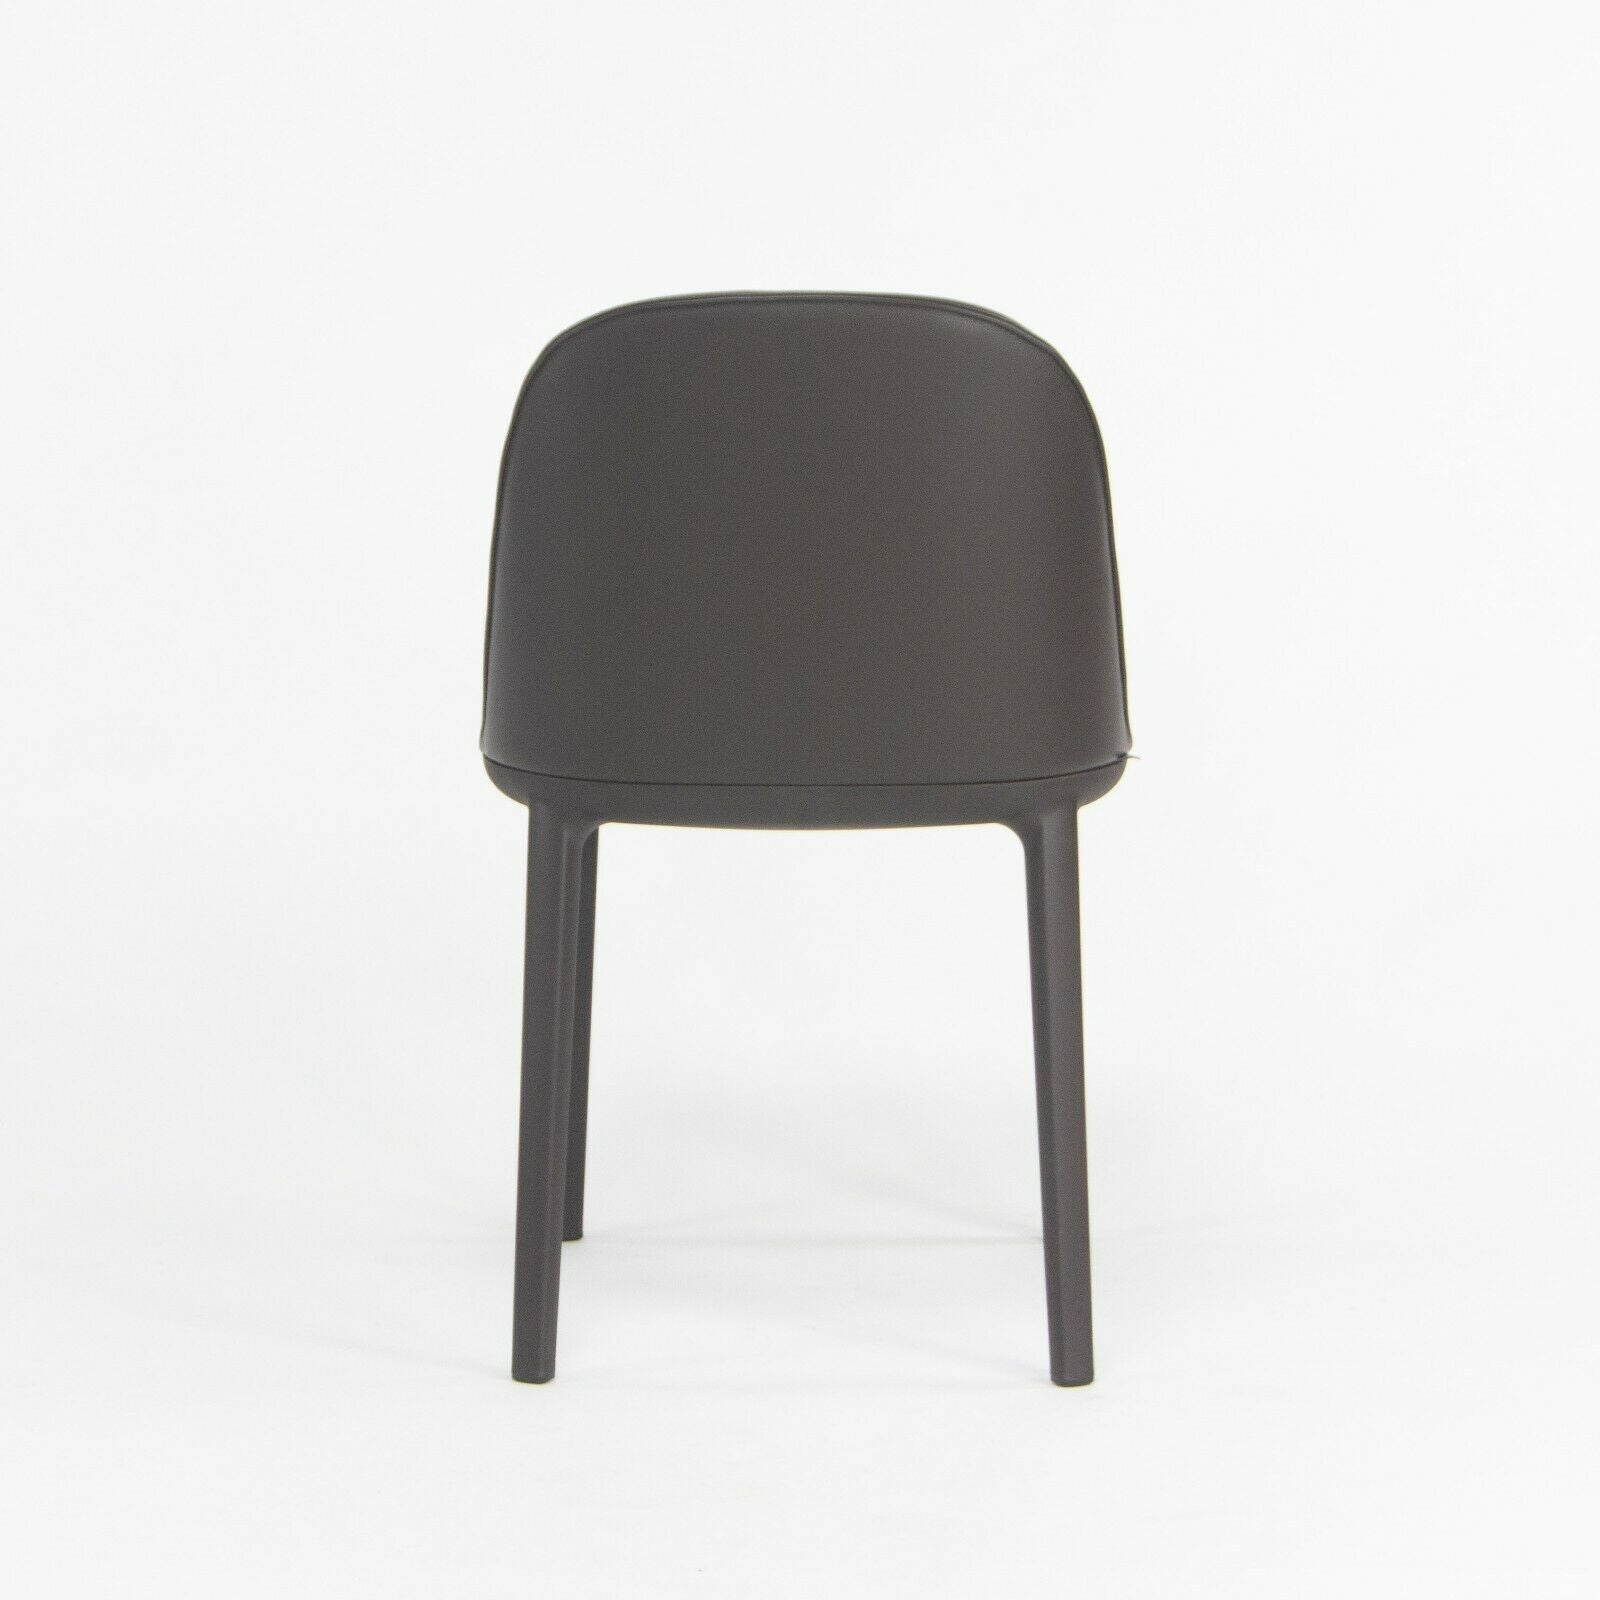 2019 Vitra Softshell Side Chair w Dark Brown Leather by Ronan & Erwan Bouroullec